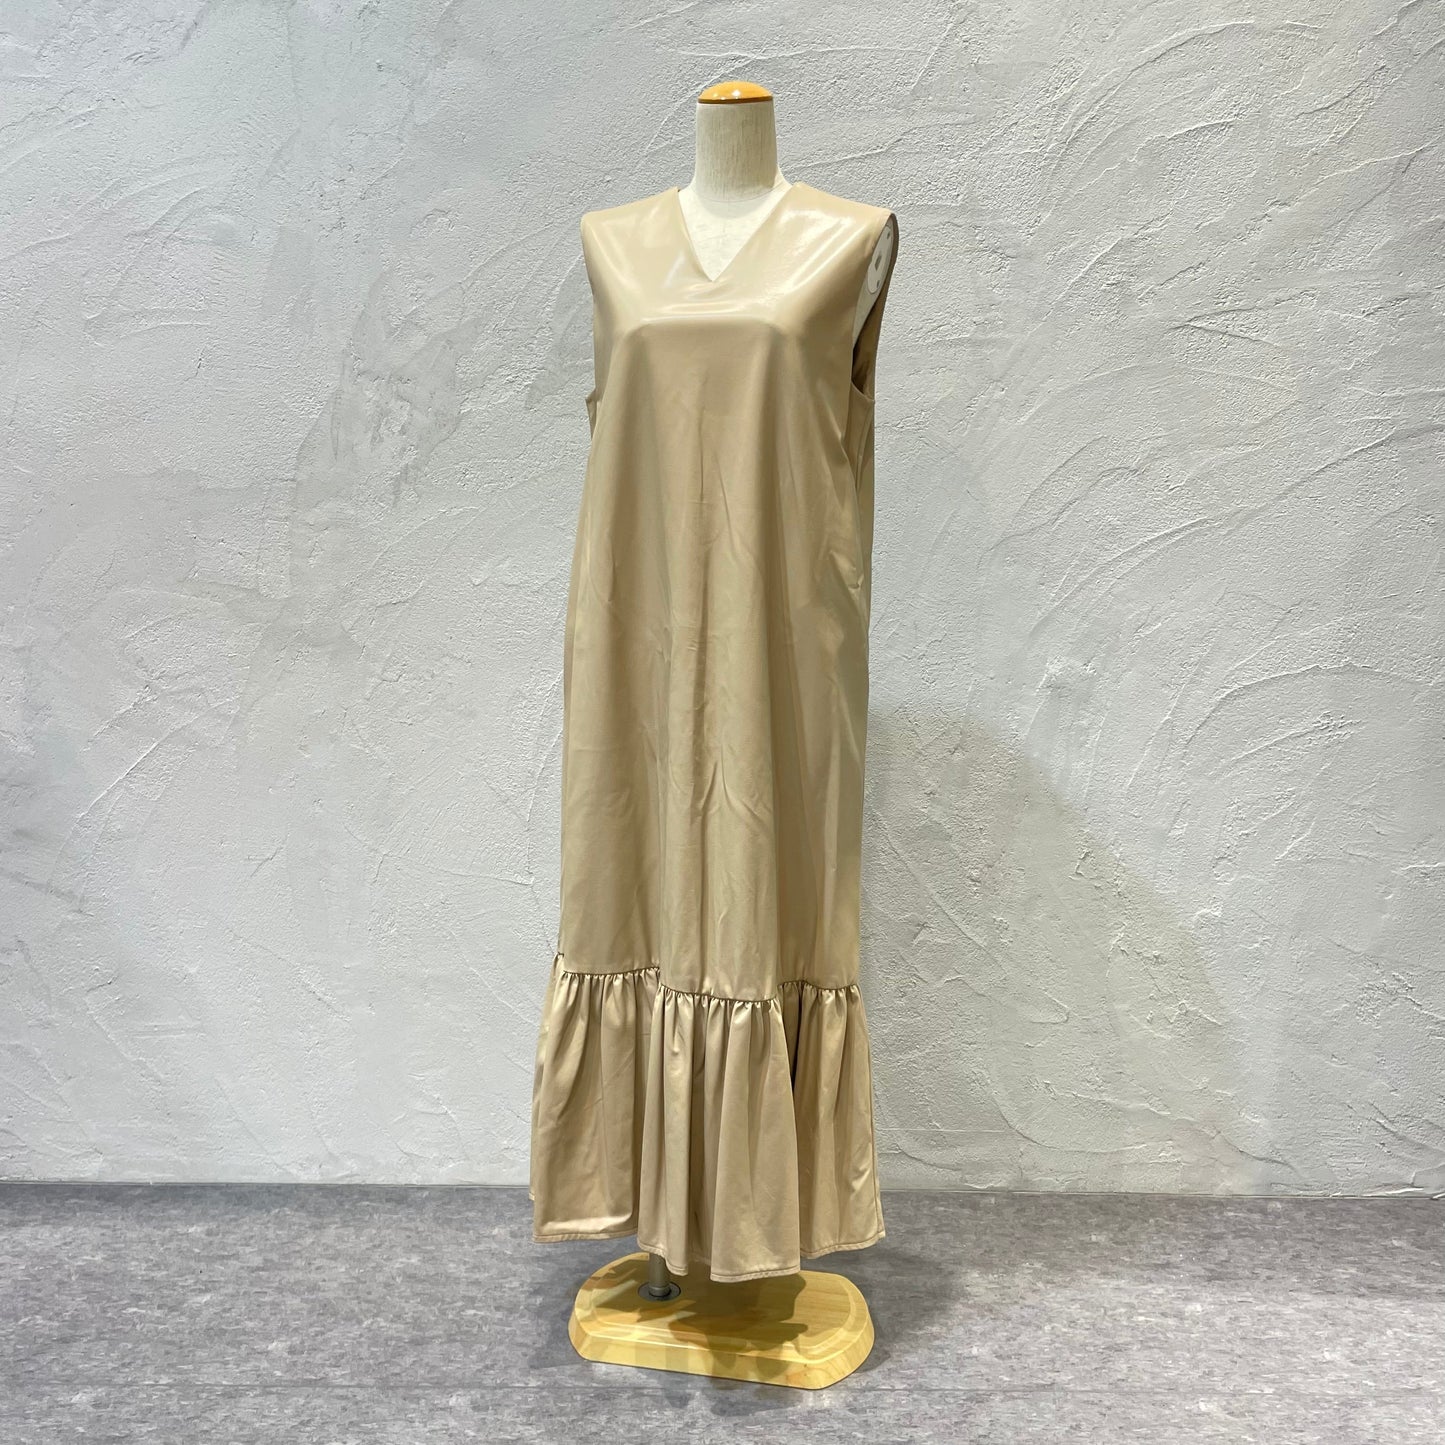 MICALLE MICALLE/人造皮革連衣裙